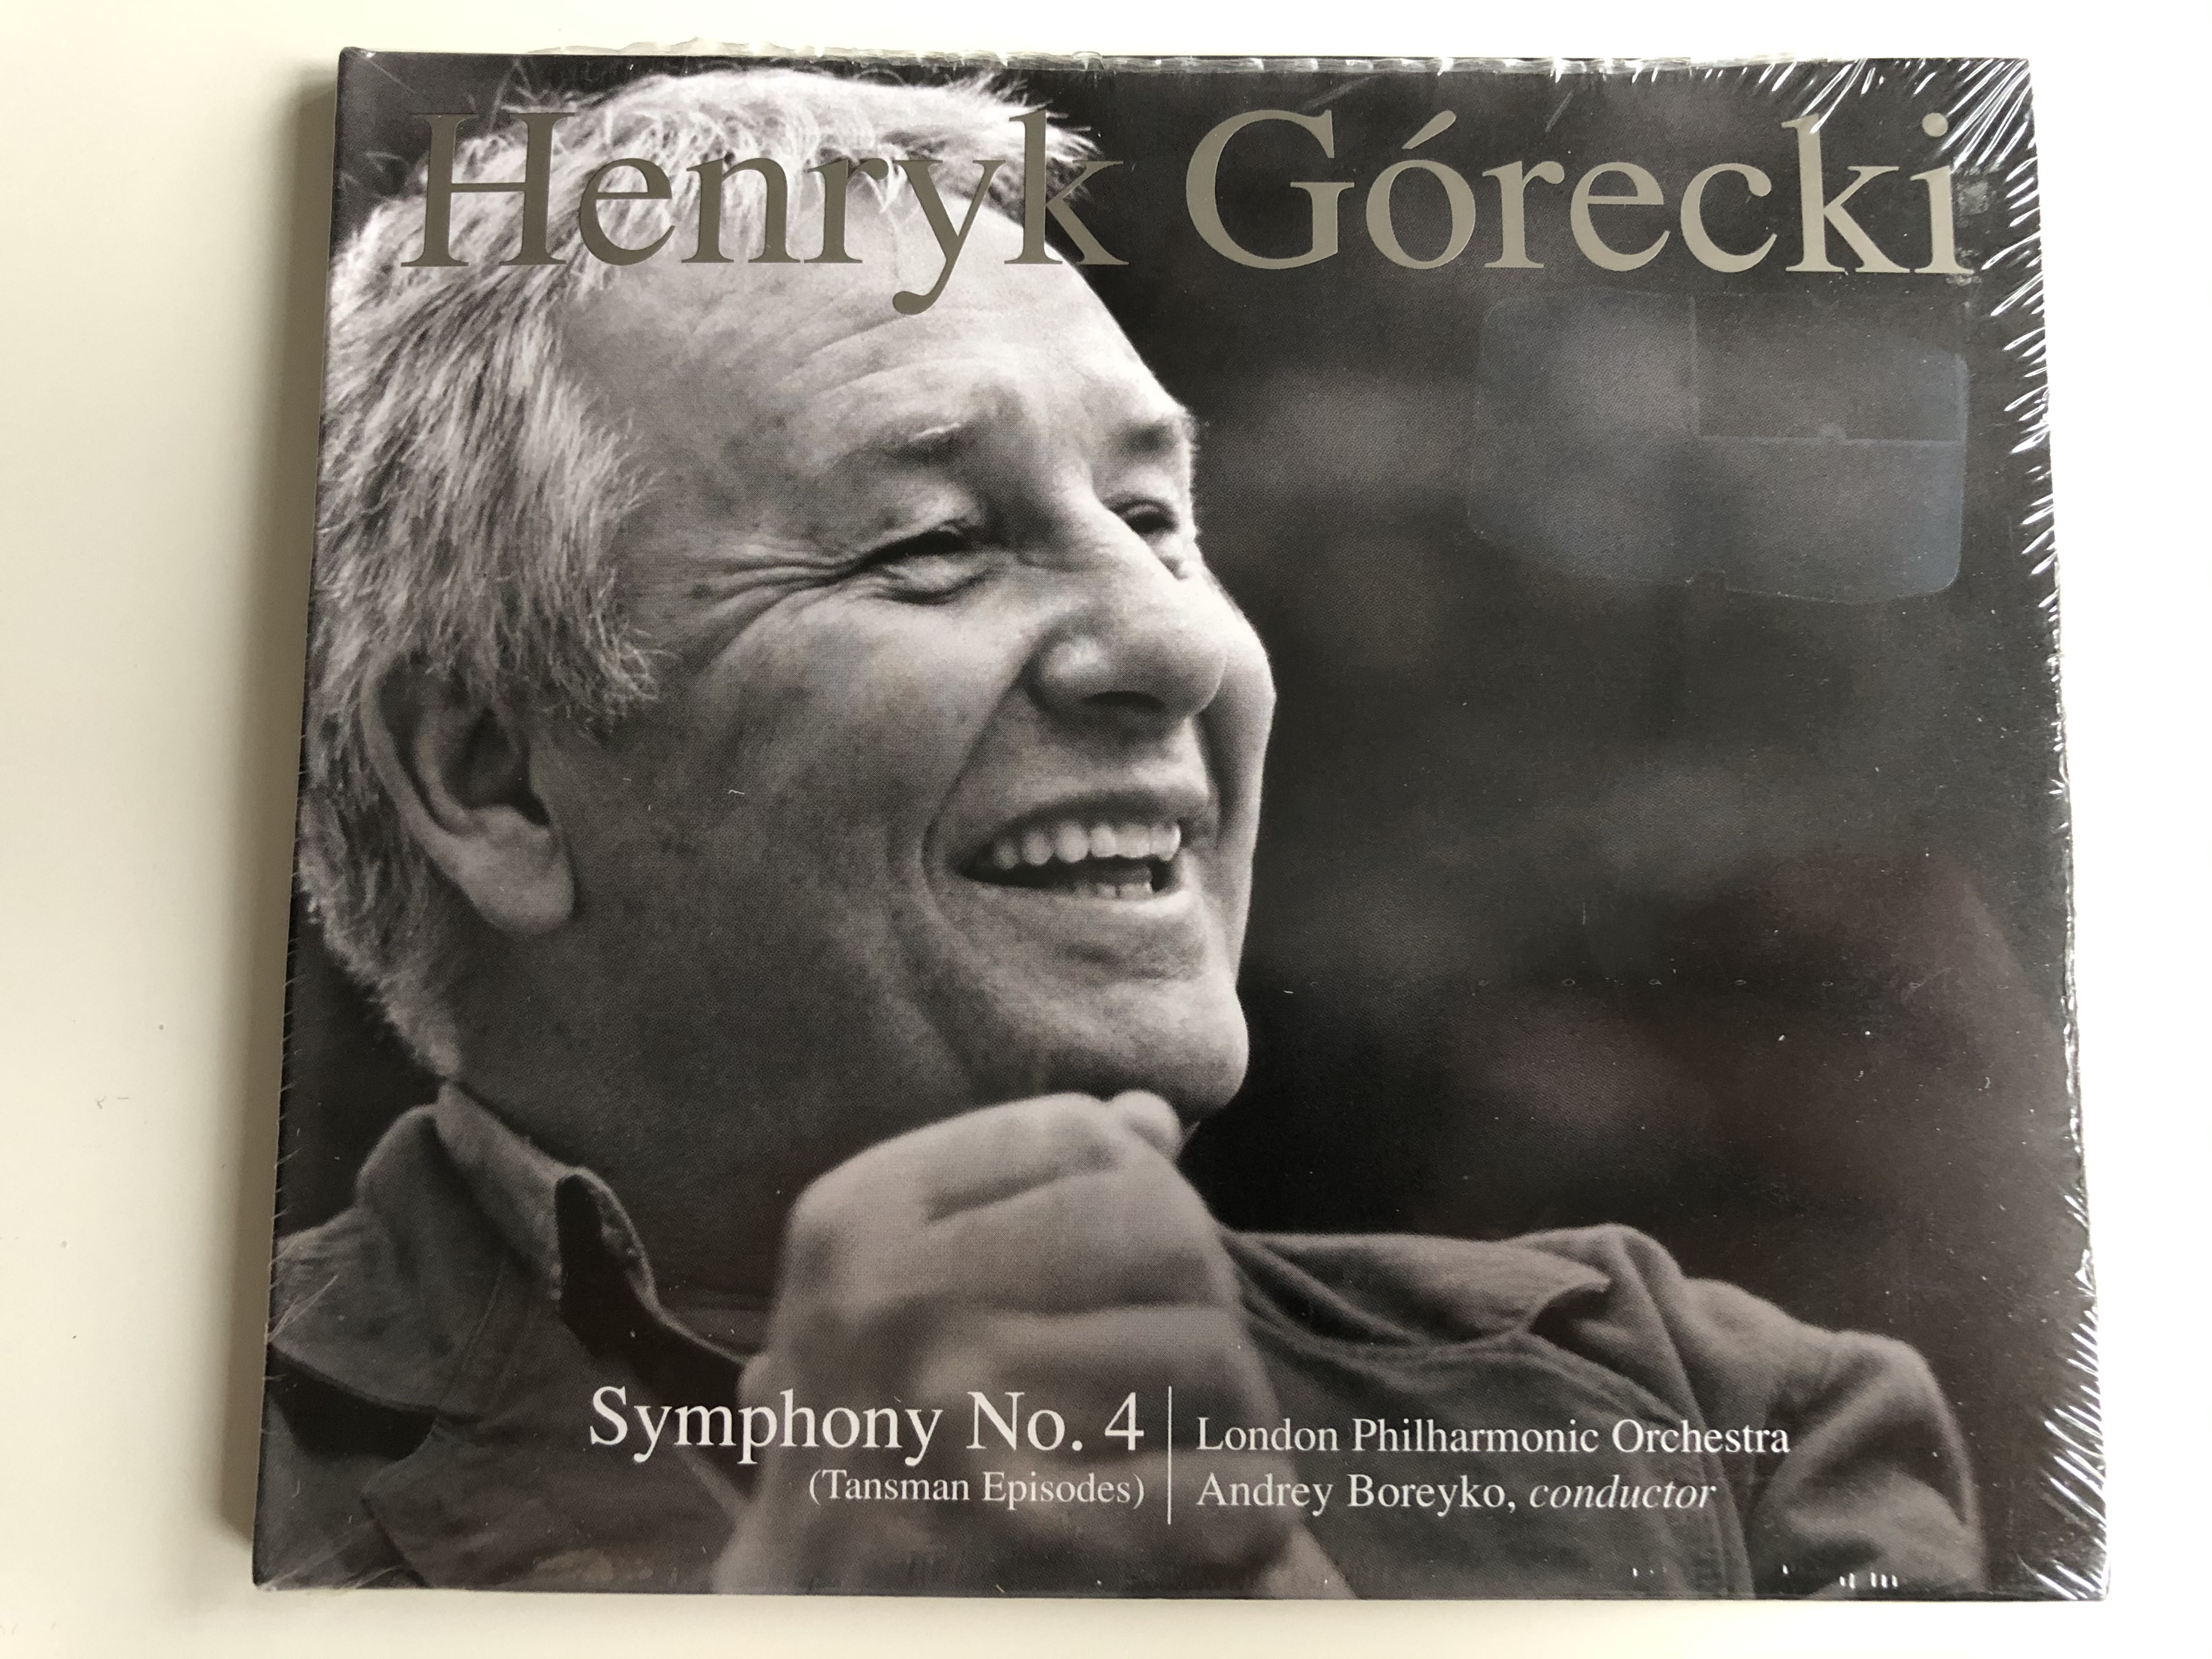 henryk-g-recki-symphony-no.-4-tansman-episodes-london-philharmonic-orchestra-andrey-boreyko-conductor-nonesuch-audio-cd-2016-7559-79503-4-1-.jpg